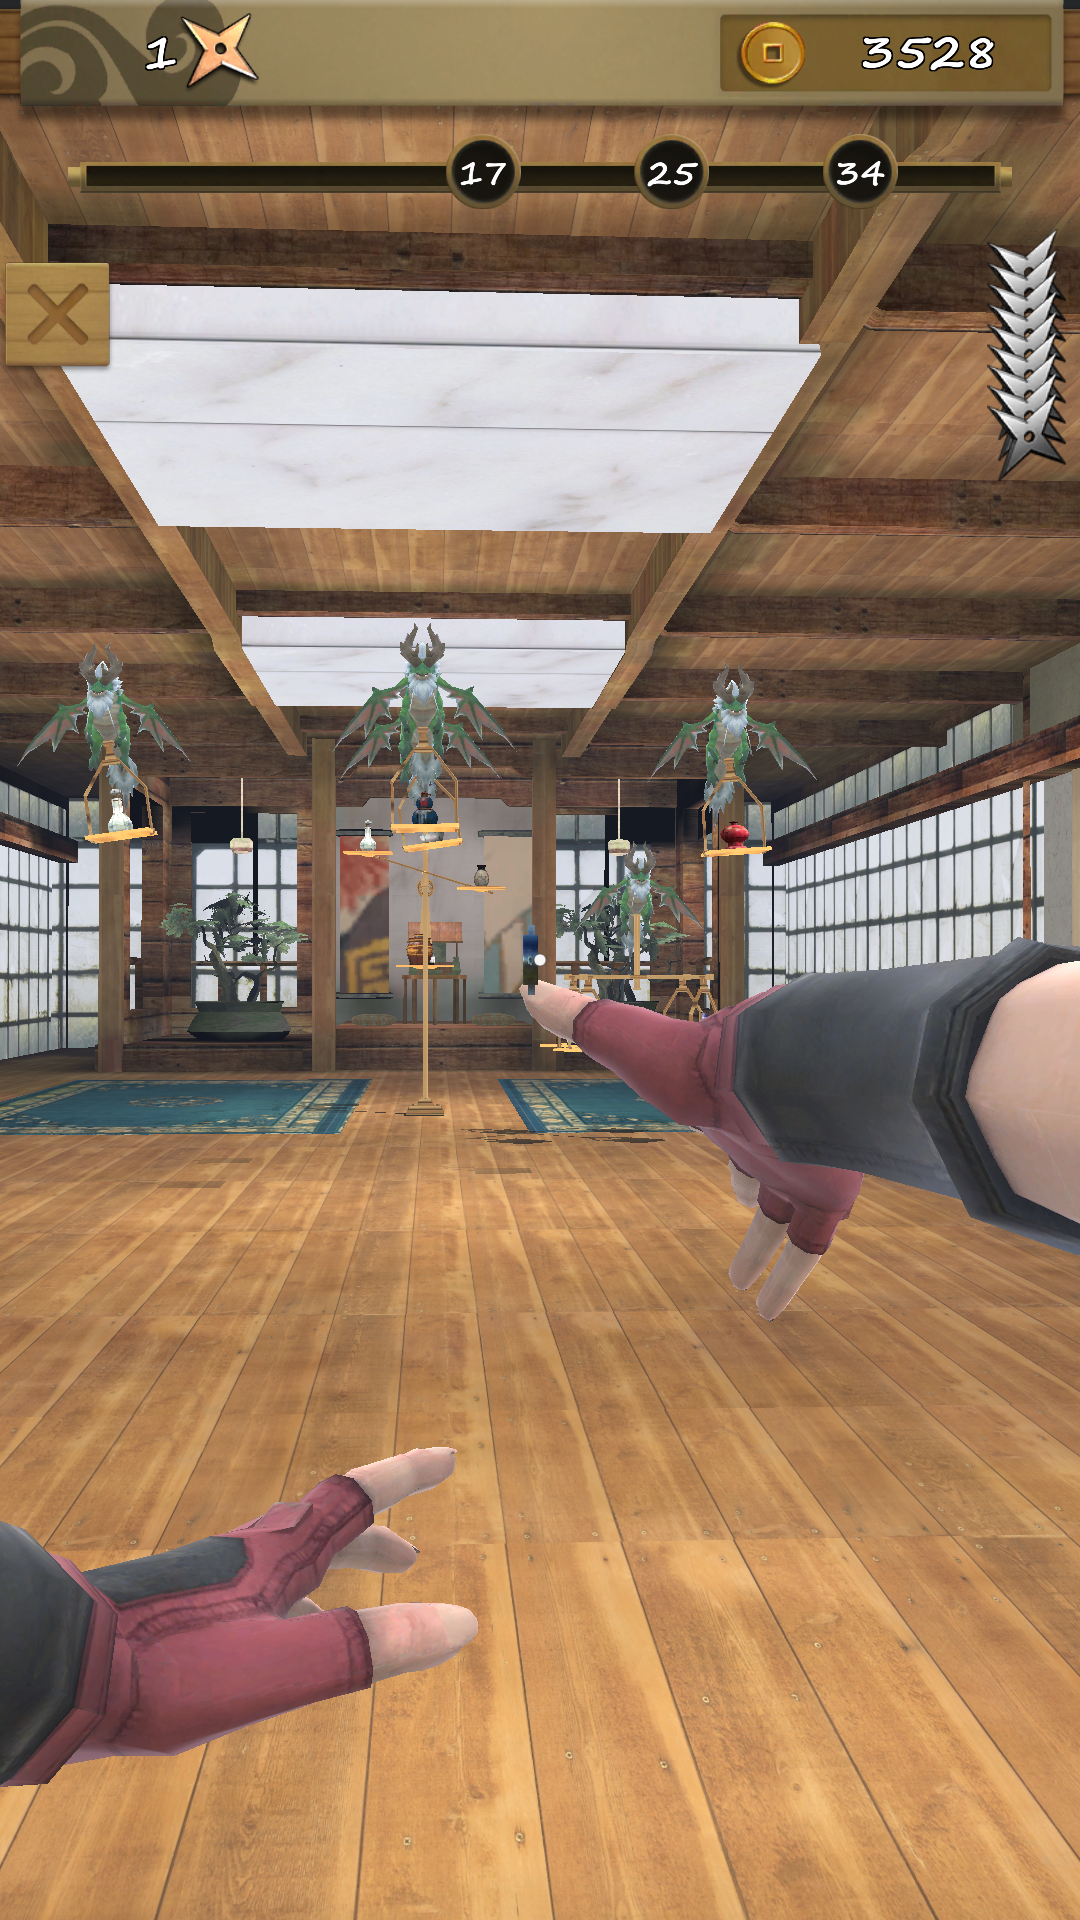 Screenshot 1 of Ninja Shuriken: Bắn phi tiêu 3.3